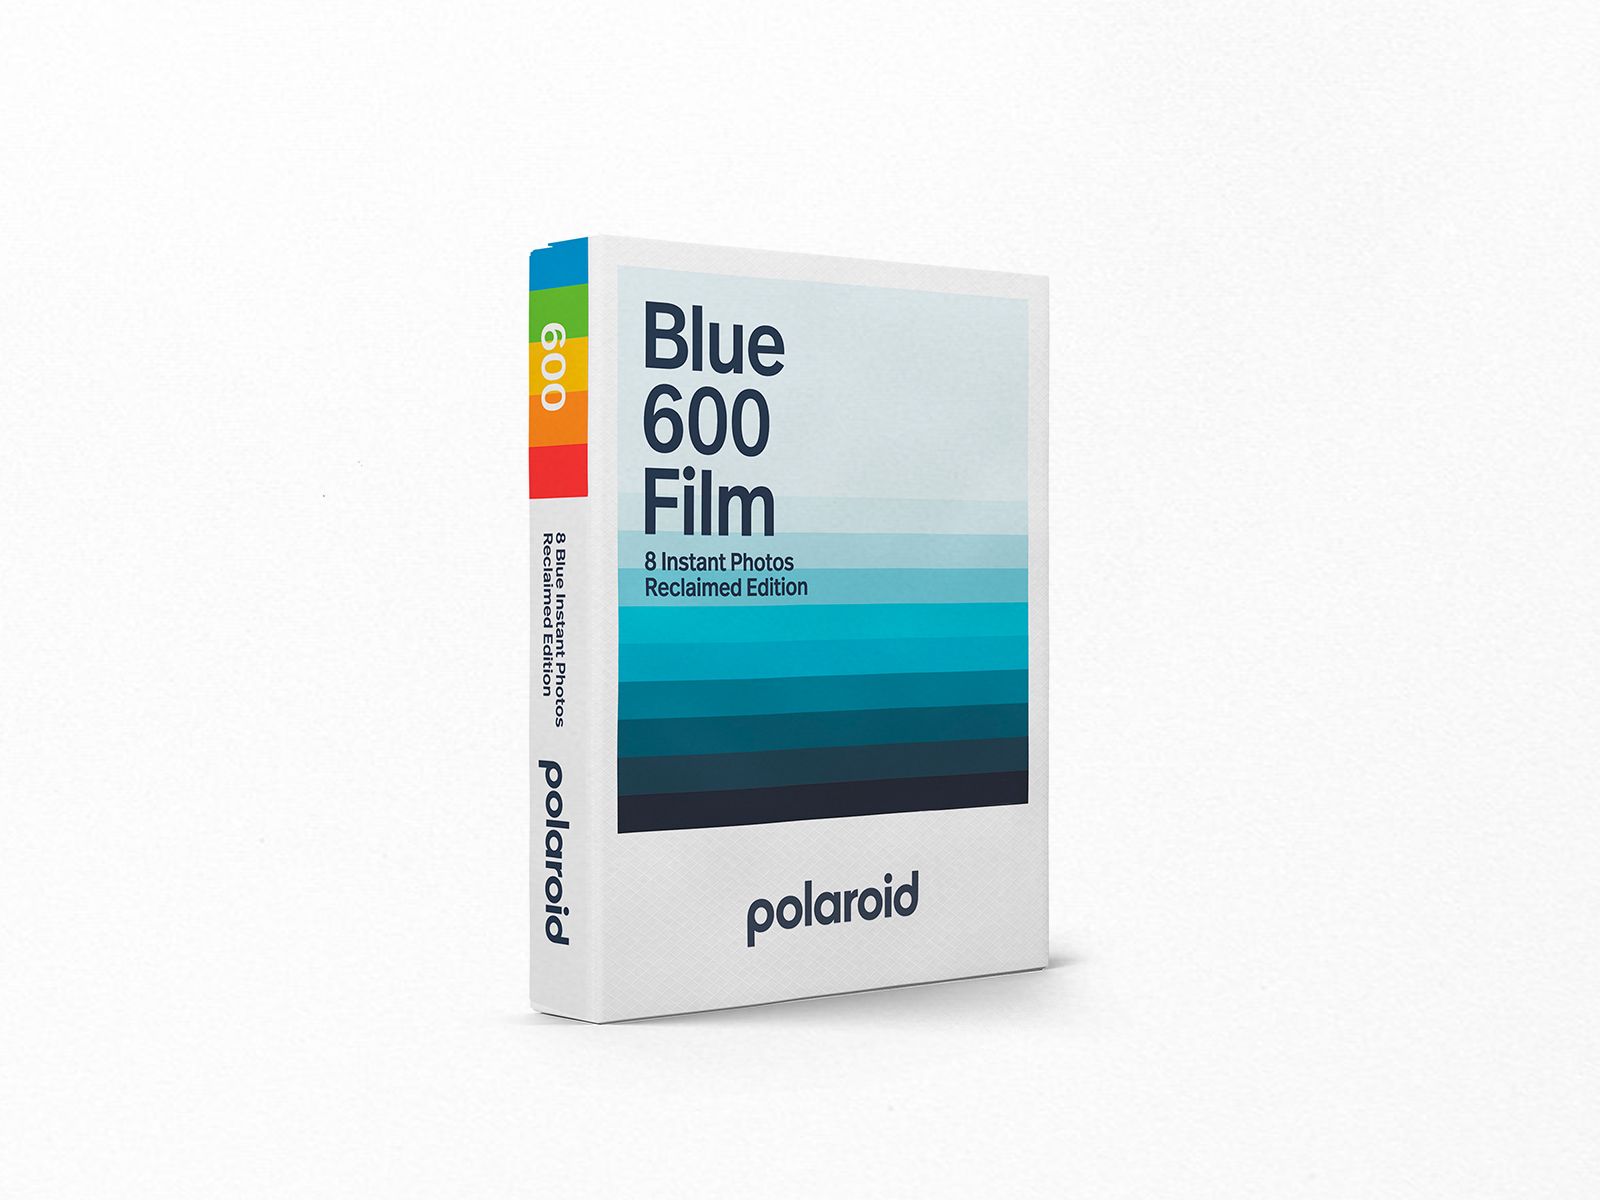 Polaroid launches new film: Blue 600 Film Reclaimed Edition